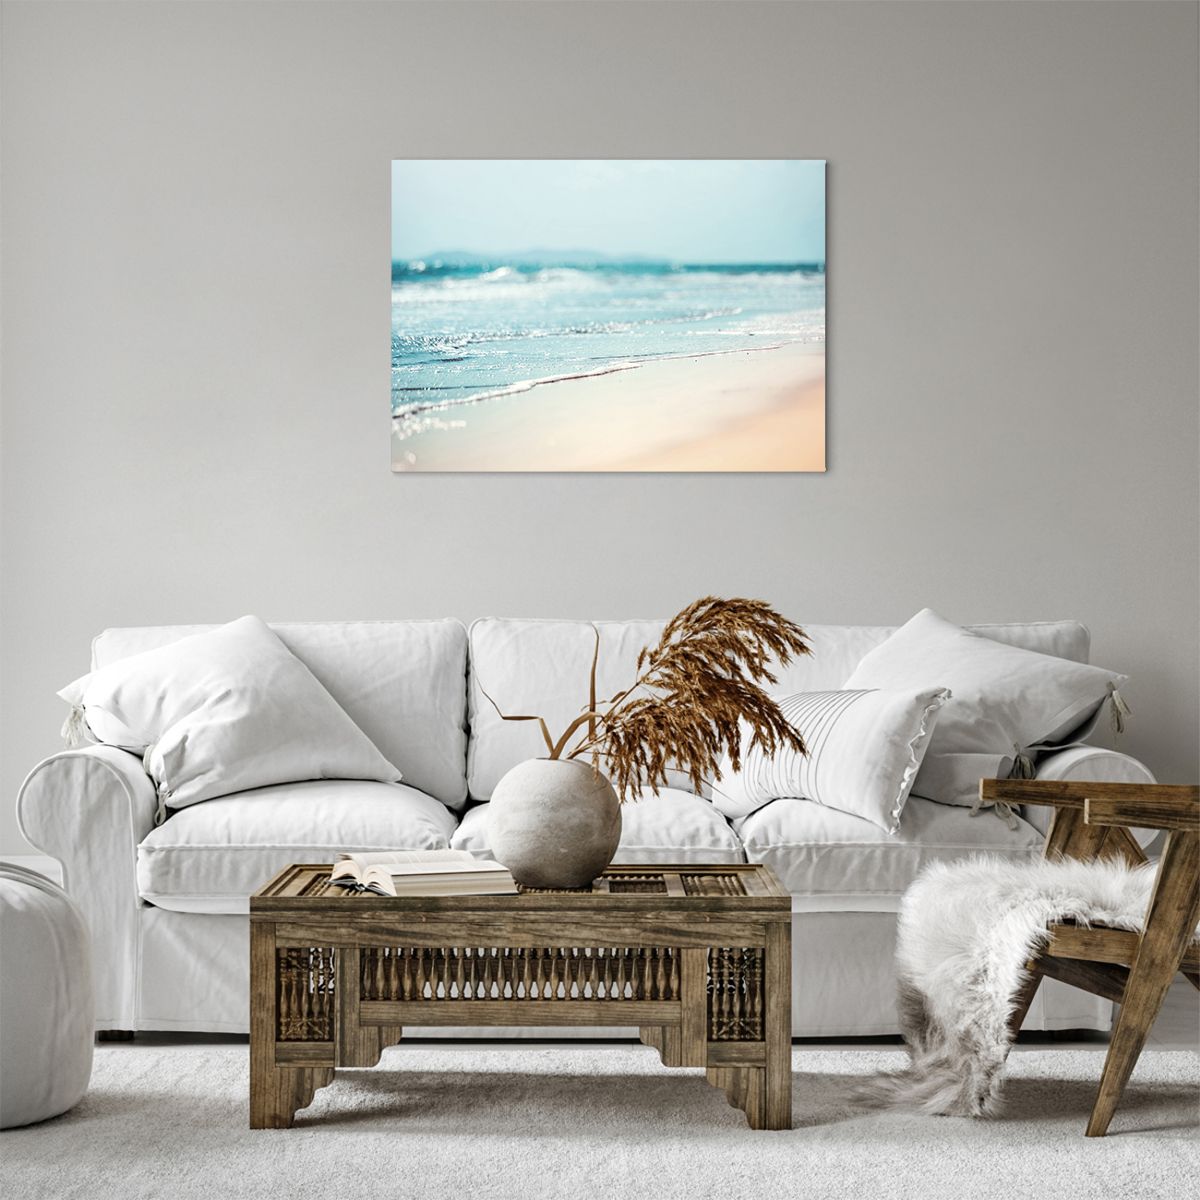 Quadro su tela Costa, Quadro su tela Spiaggia, Quadro su tela Mare, Quadro su tela Natura, Quadro su tela Paesaggio